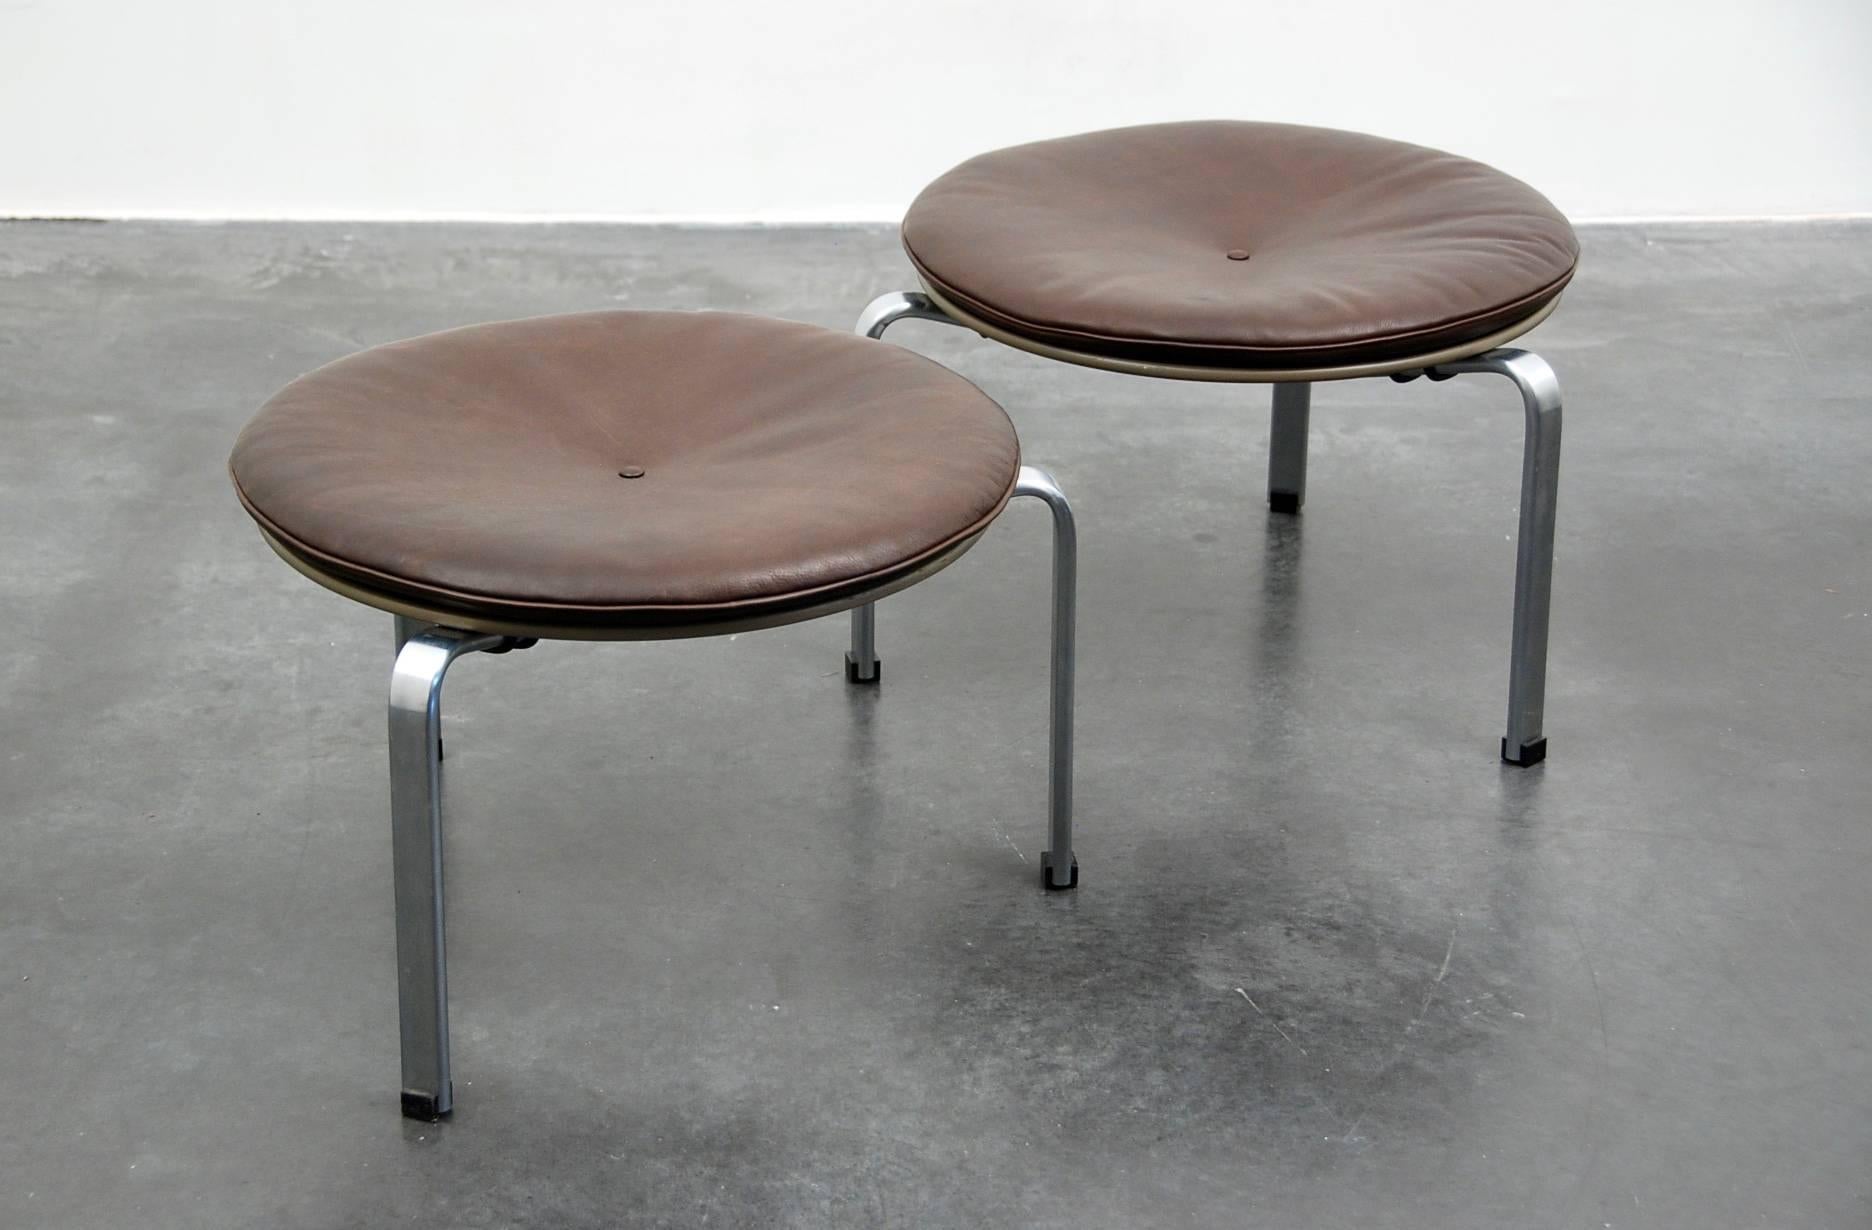 Poul Kjærholm pair of stools for E Kold Kristensen, Denmark, 1958, model PK33 with steel Frame and cushion in brown leather.
  